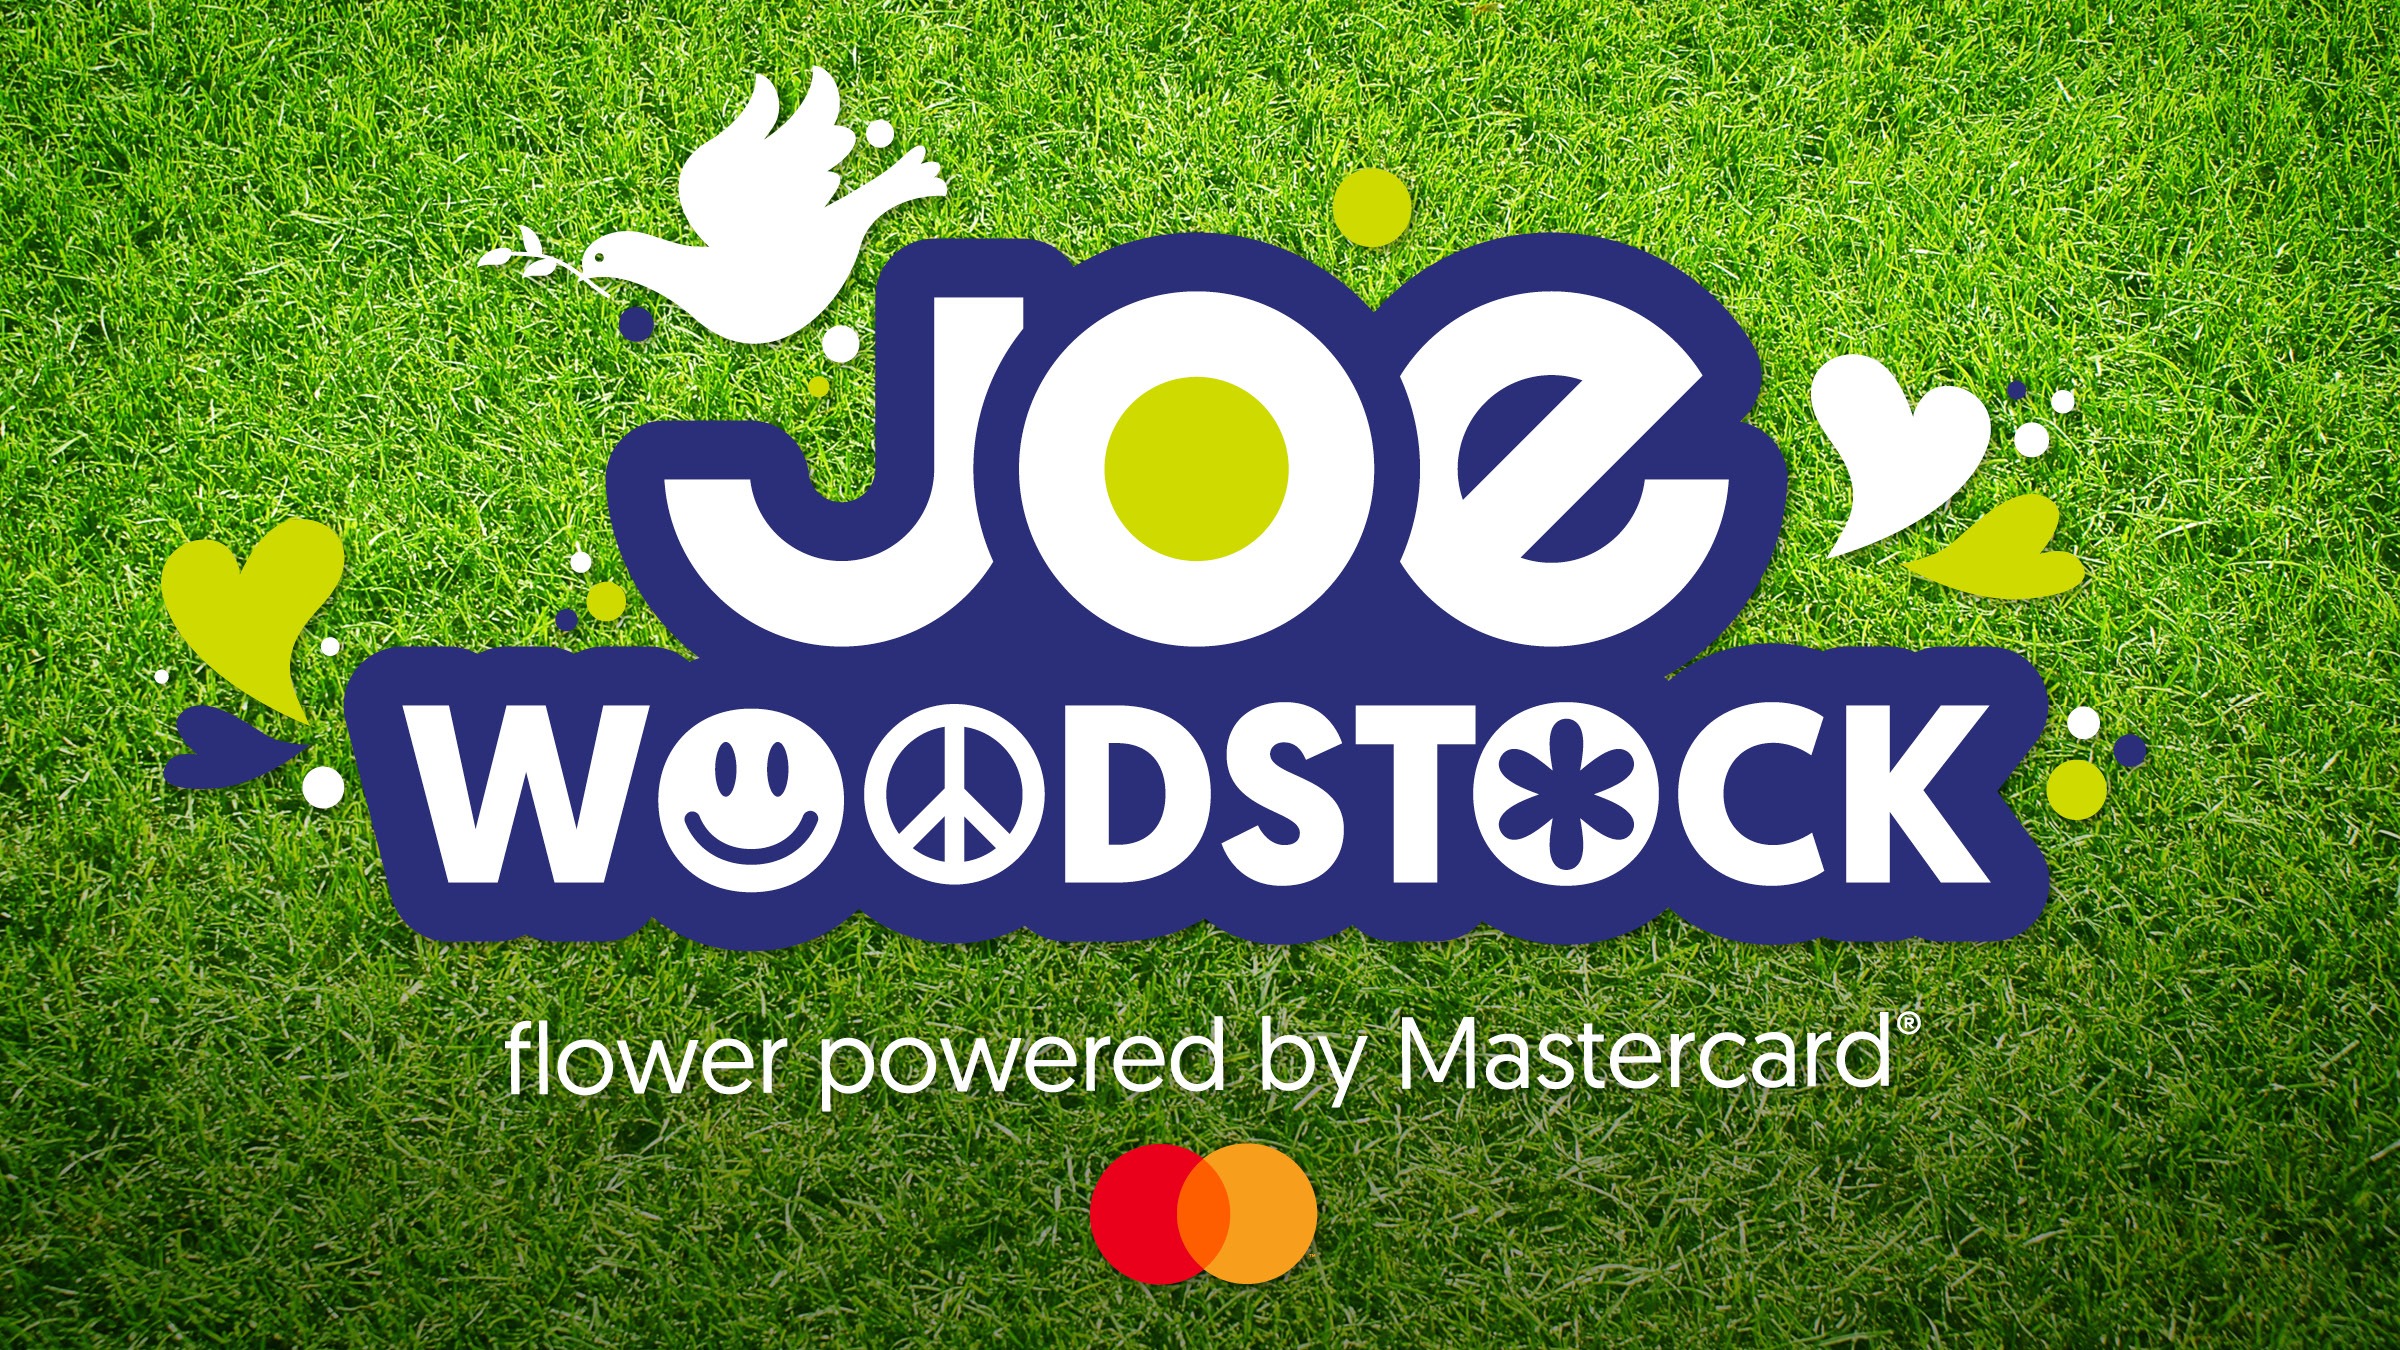 Joe woodstock site